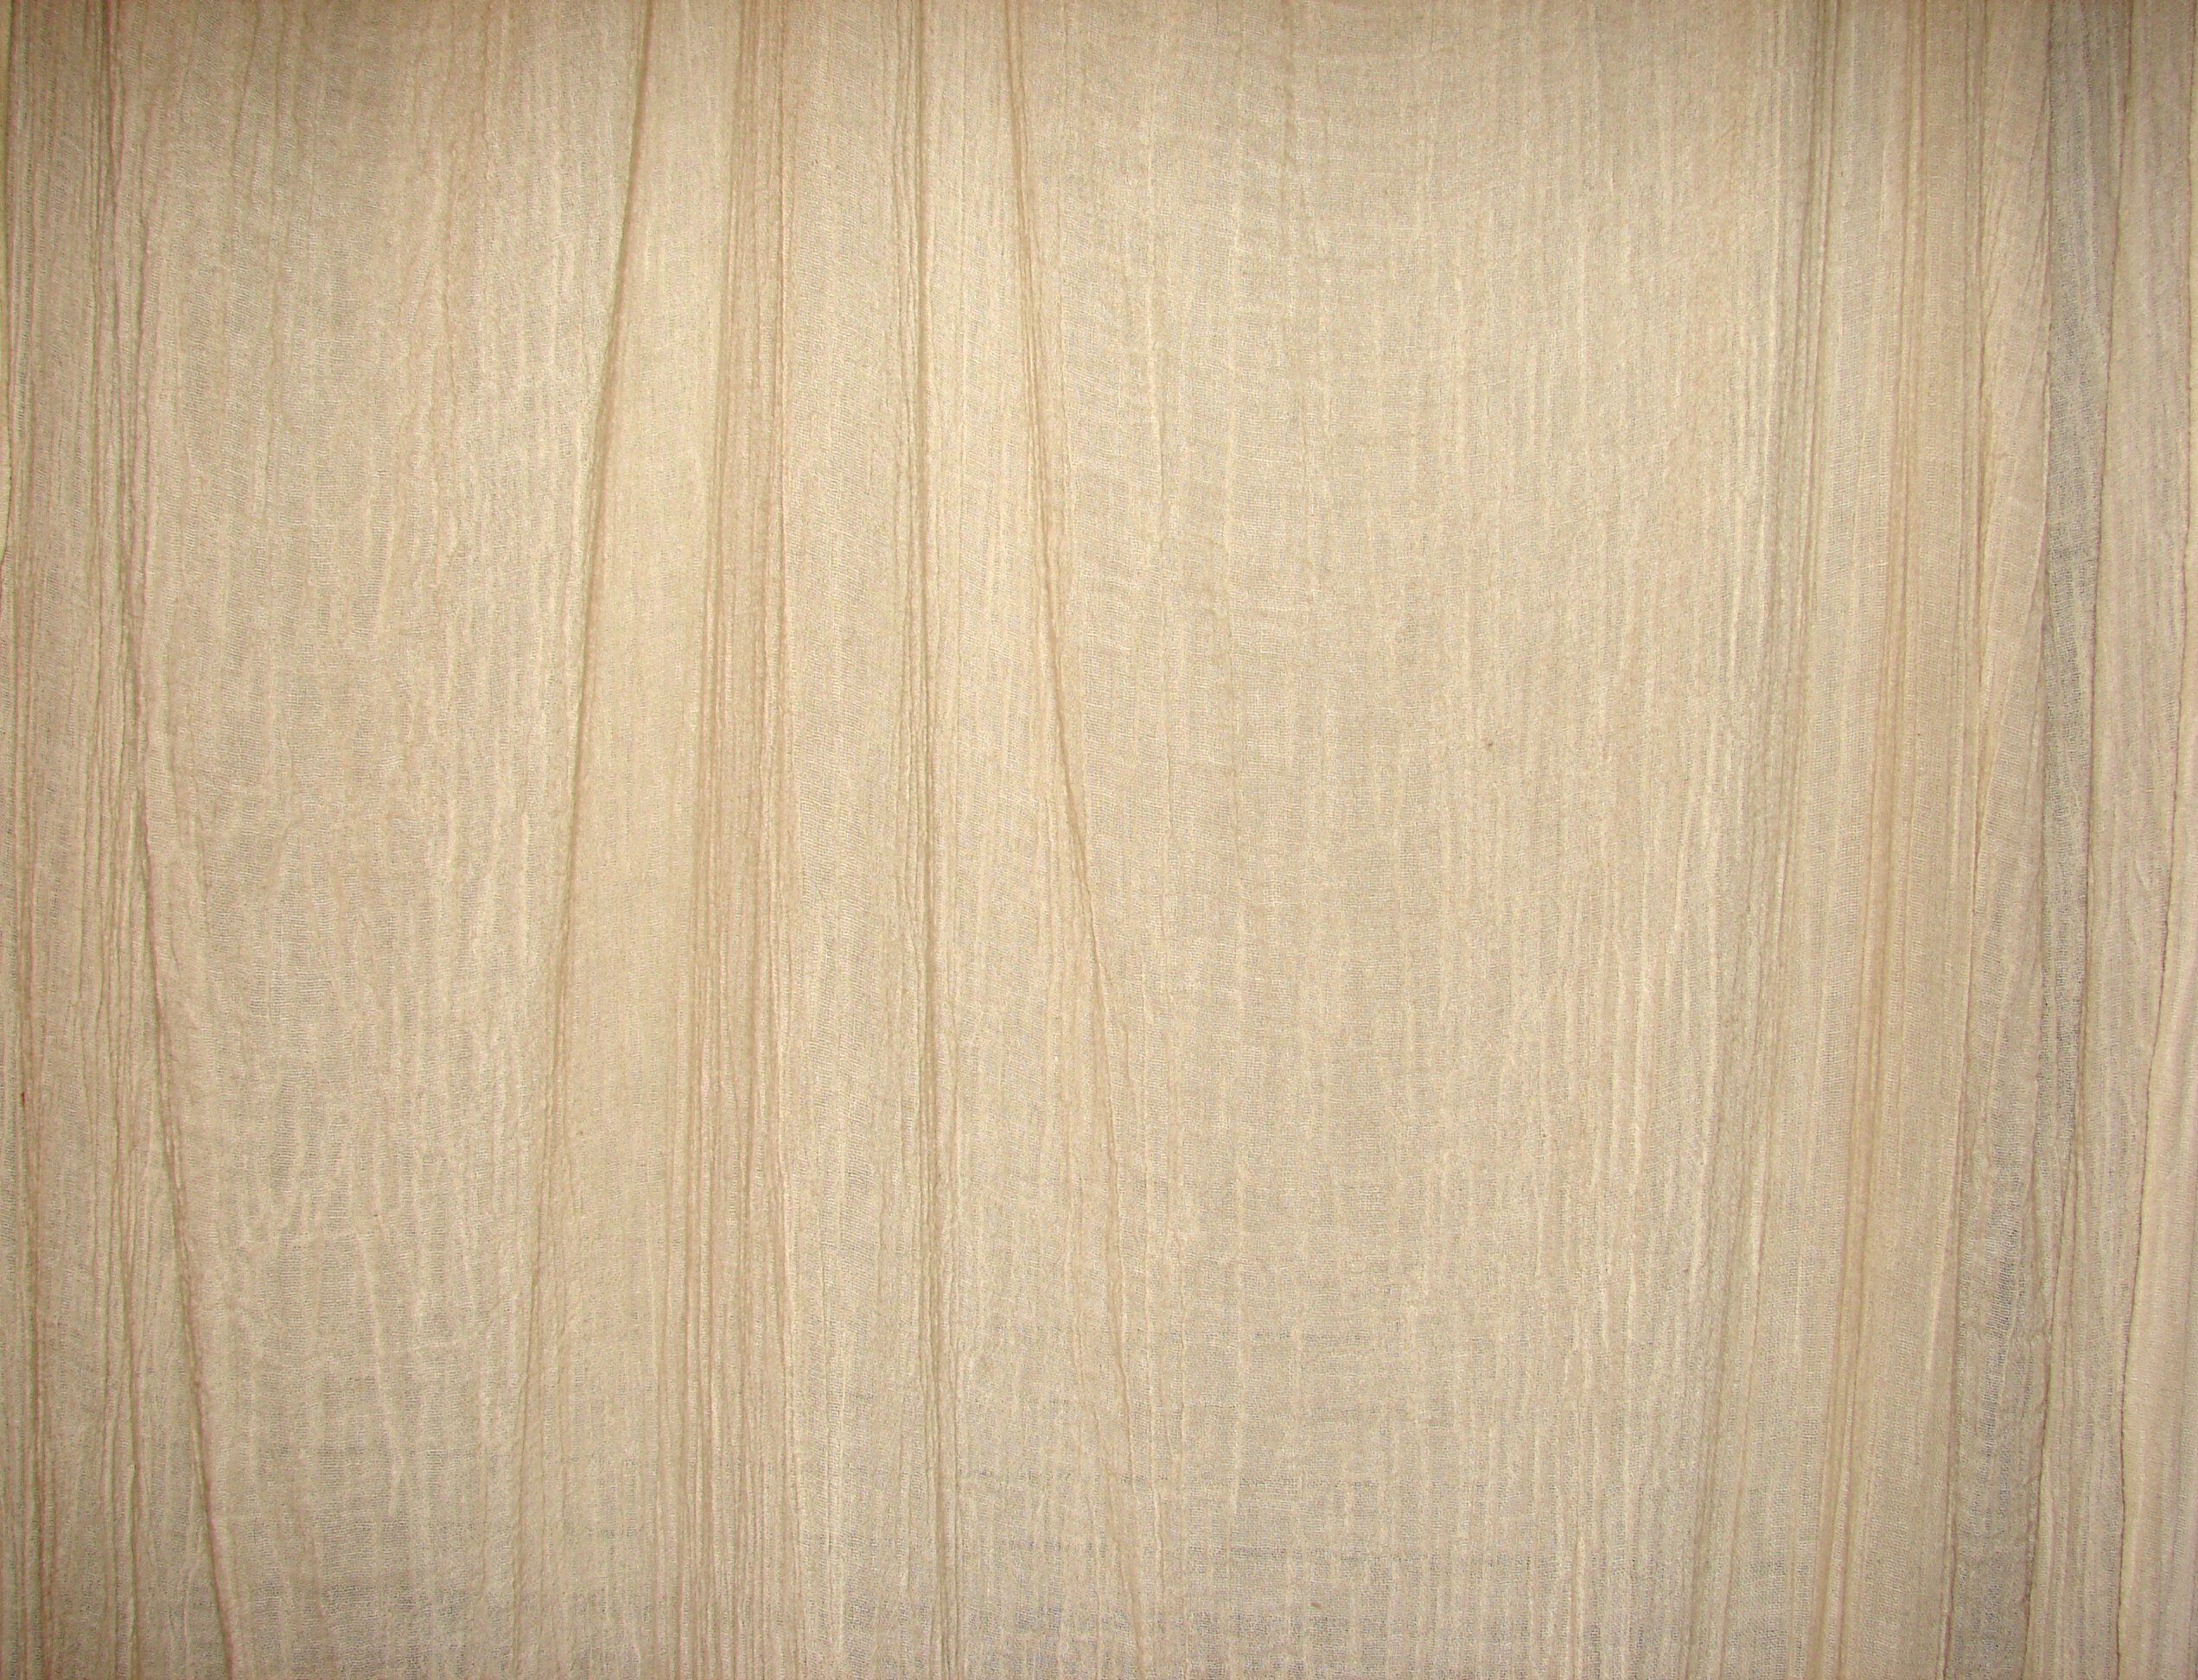 Ivory Curtain Cloth Texture